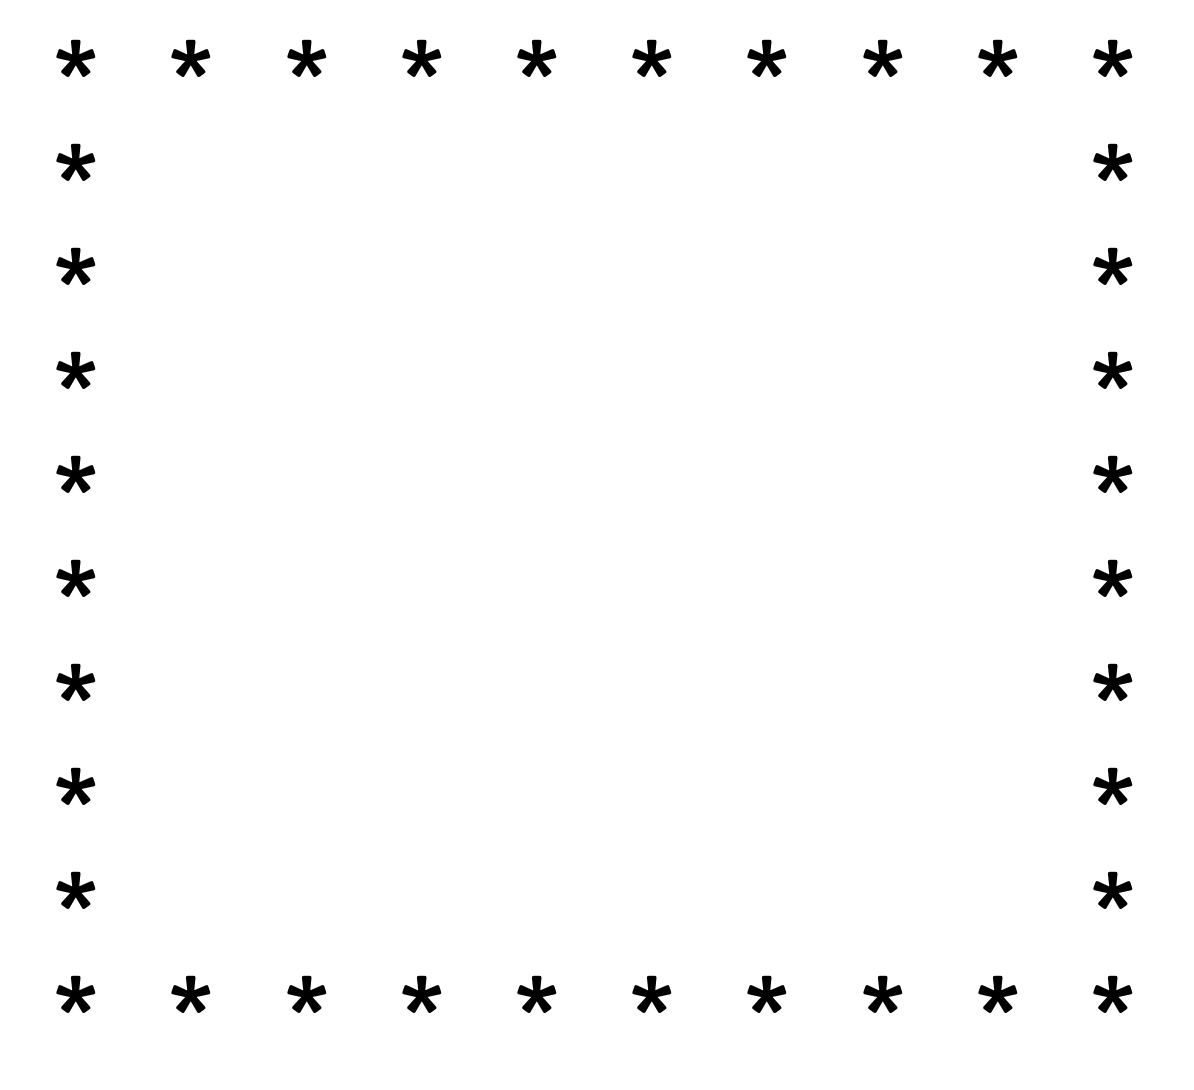 Hallow-Square-star-pattern-program-in-c